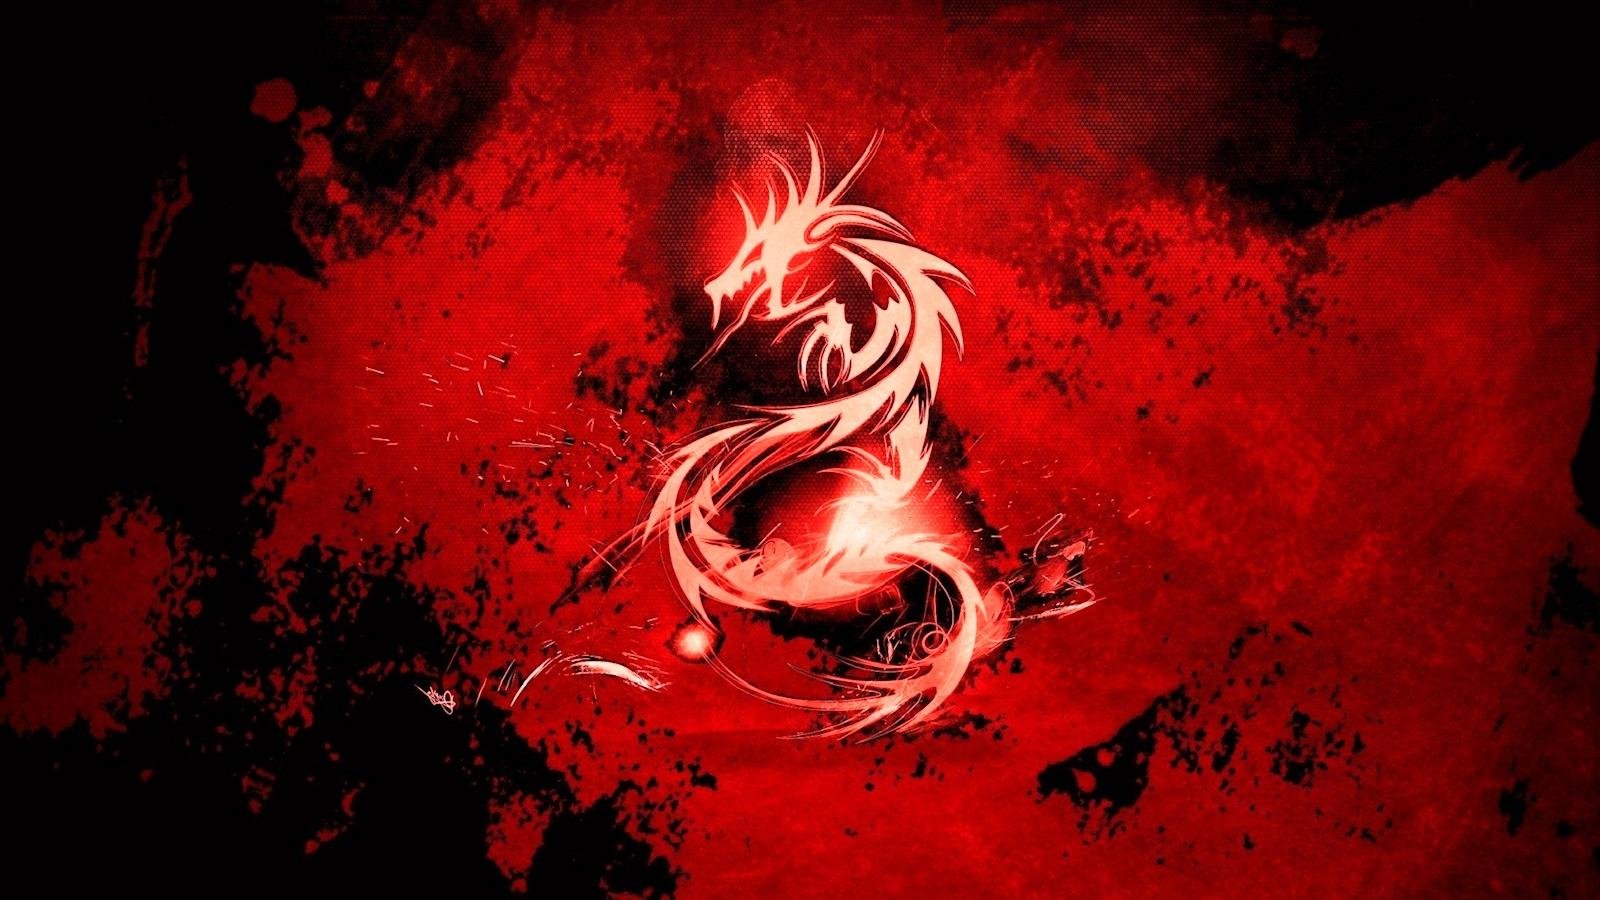 [76+] Red Dragon Wallpaper on WallpaperSafari